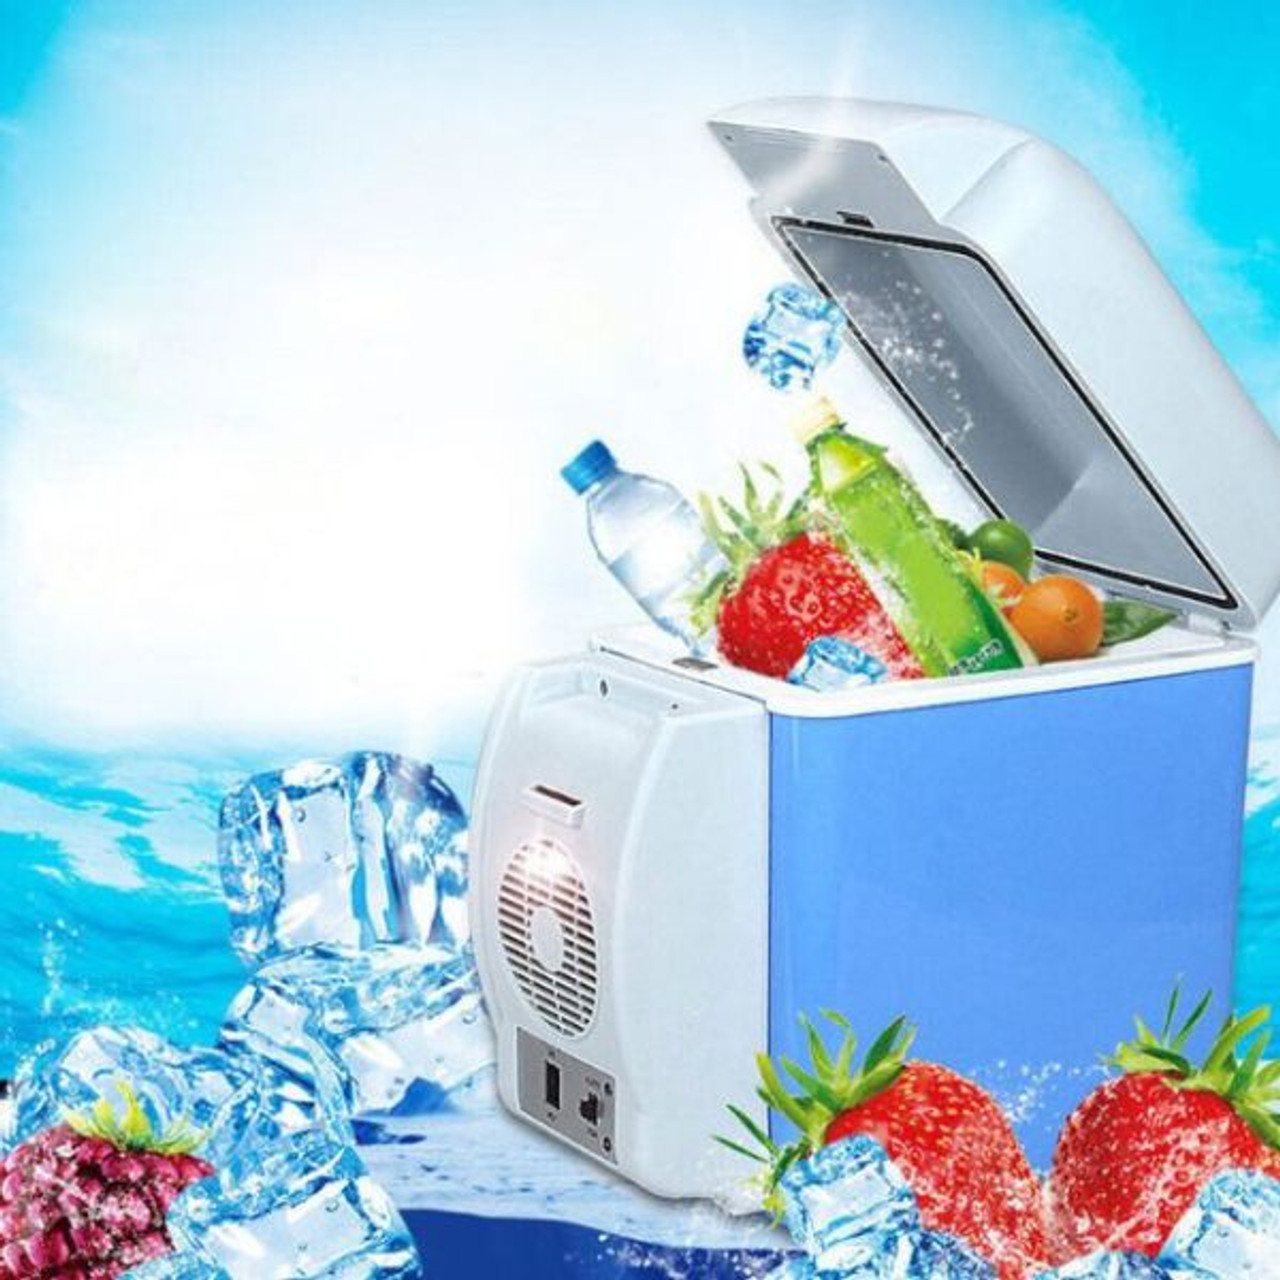 Portable Car Refrigerator Cooler & Warmer 7.5L Capacity - Snatcher